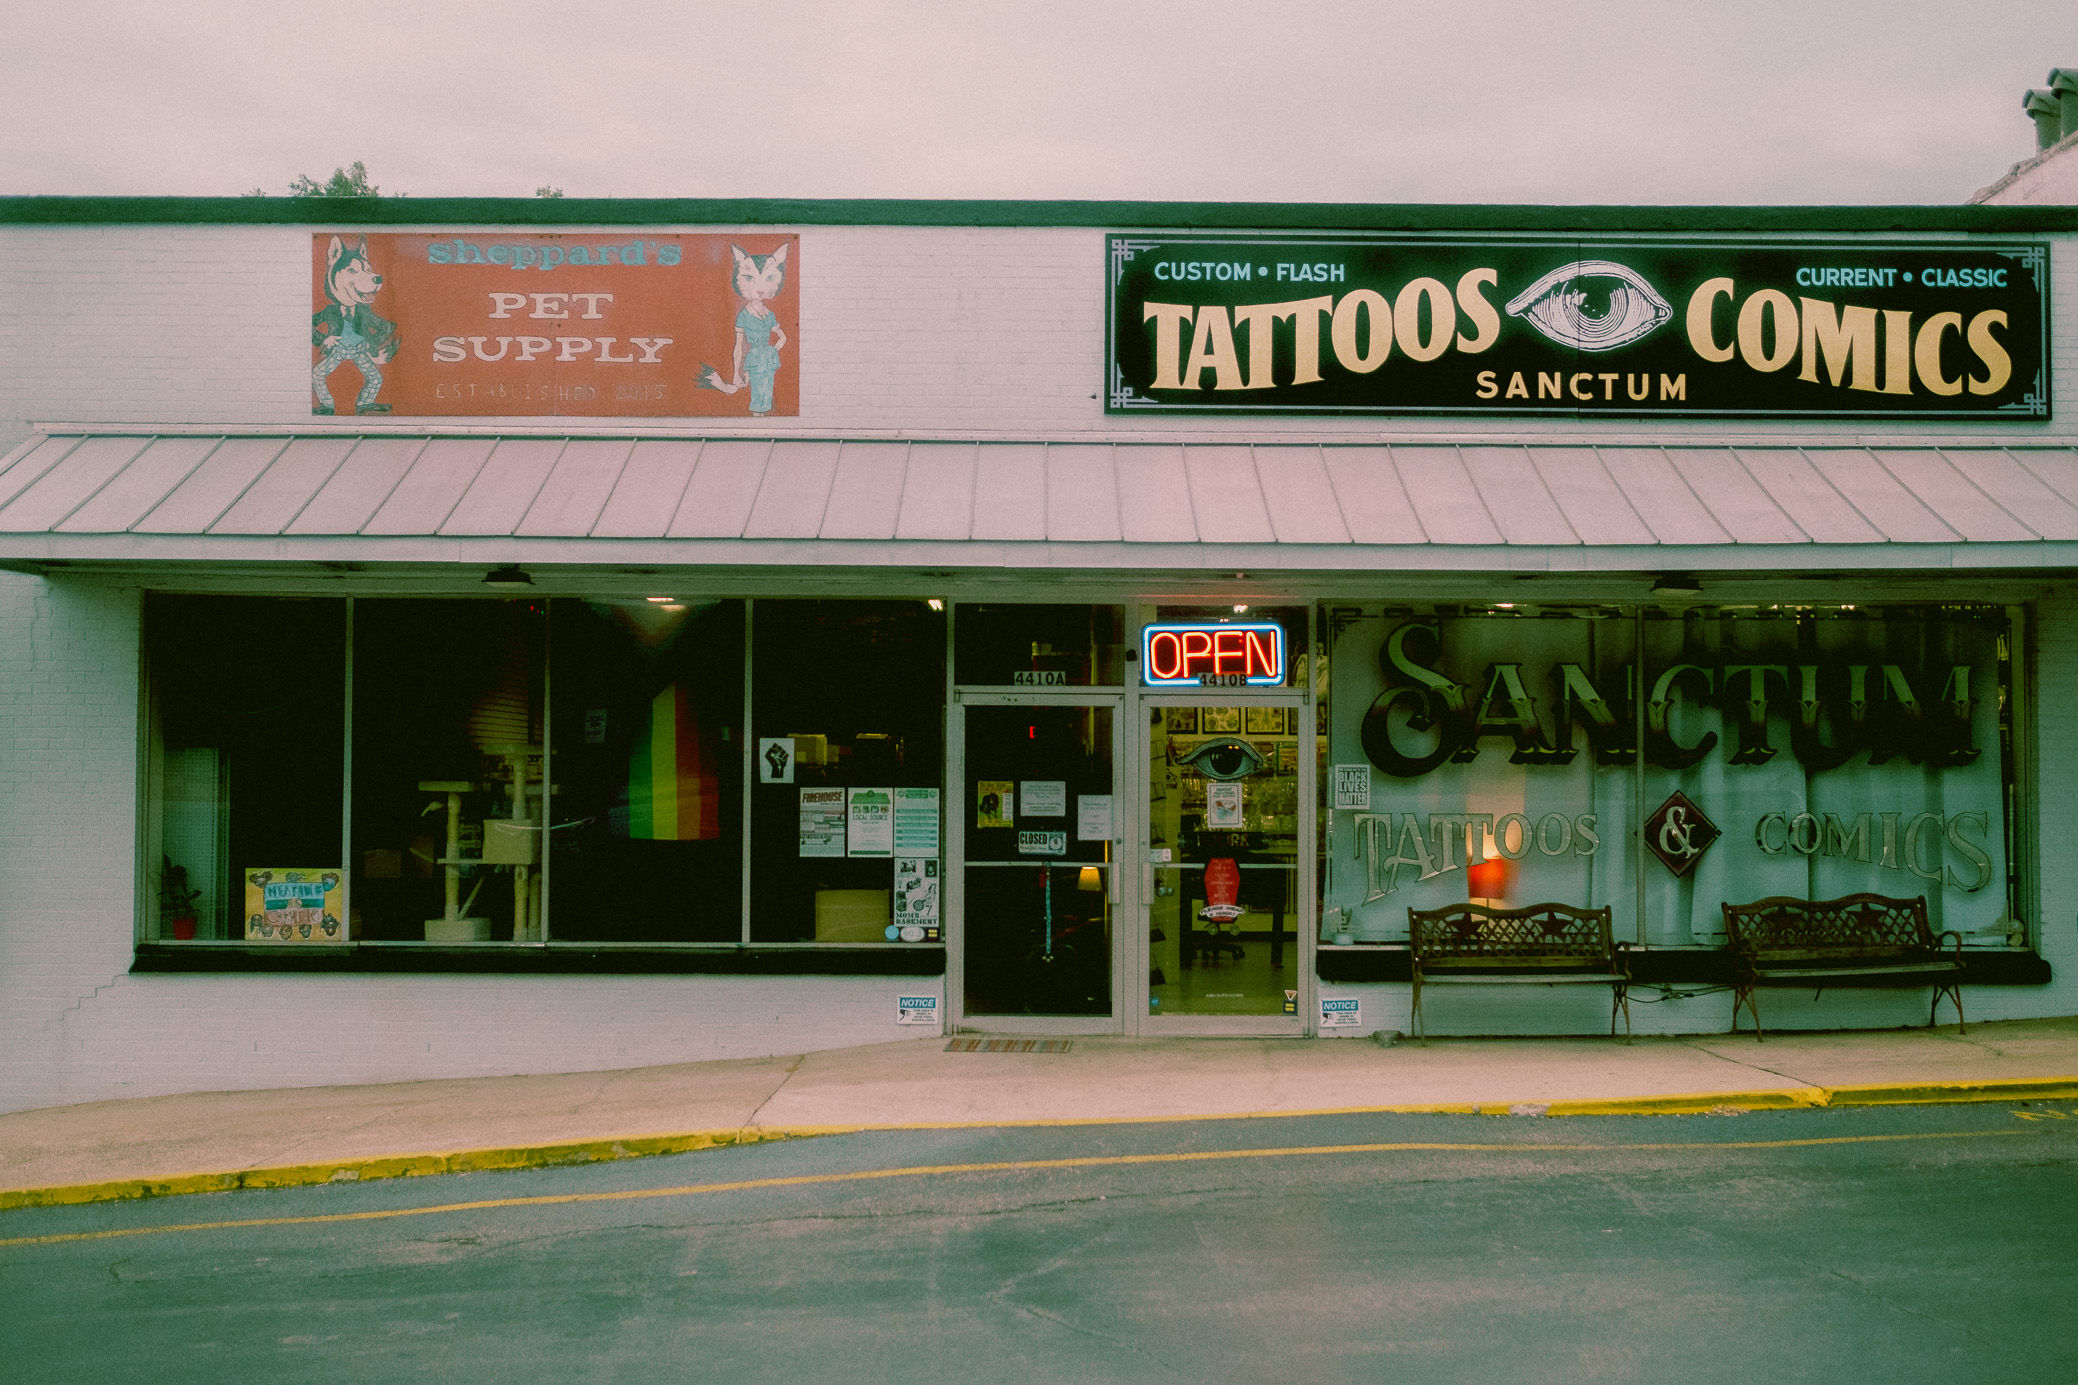 Sheppard's Pet Supply + Sanctum Tattoos and Comics | Birmingham, Alabama | September 14th, 2021